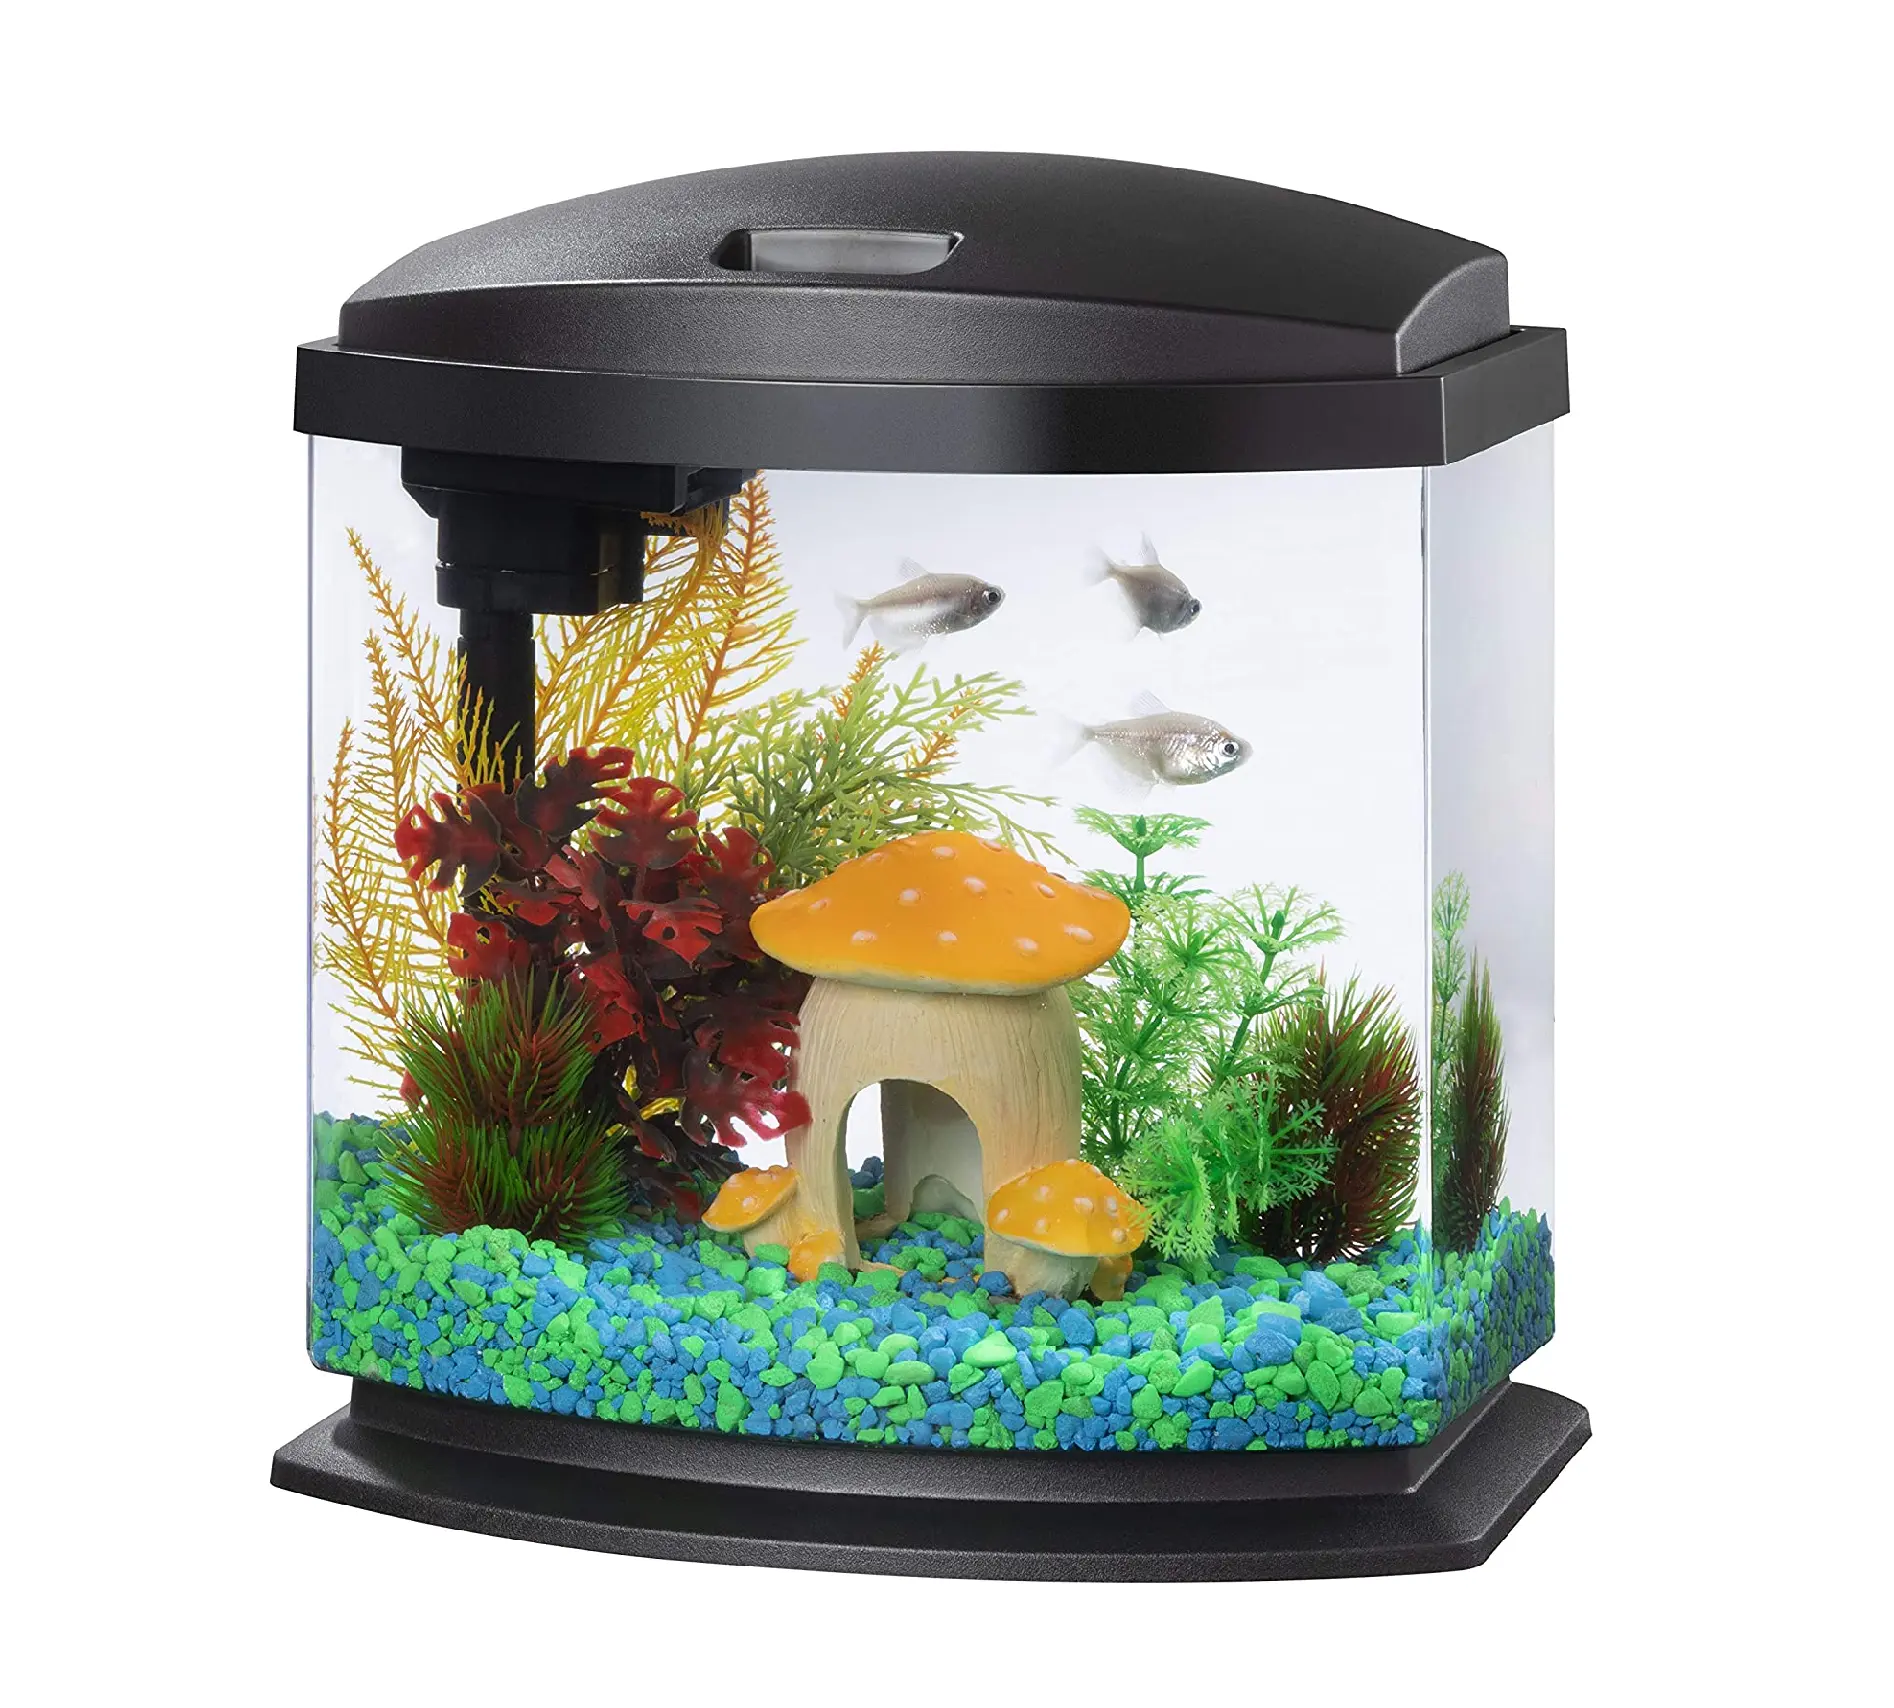 Petco Tank Sale Fish Tank 25 1